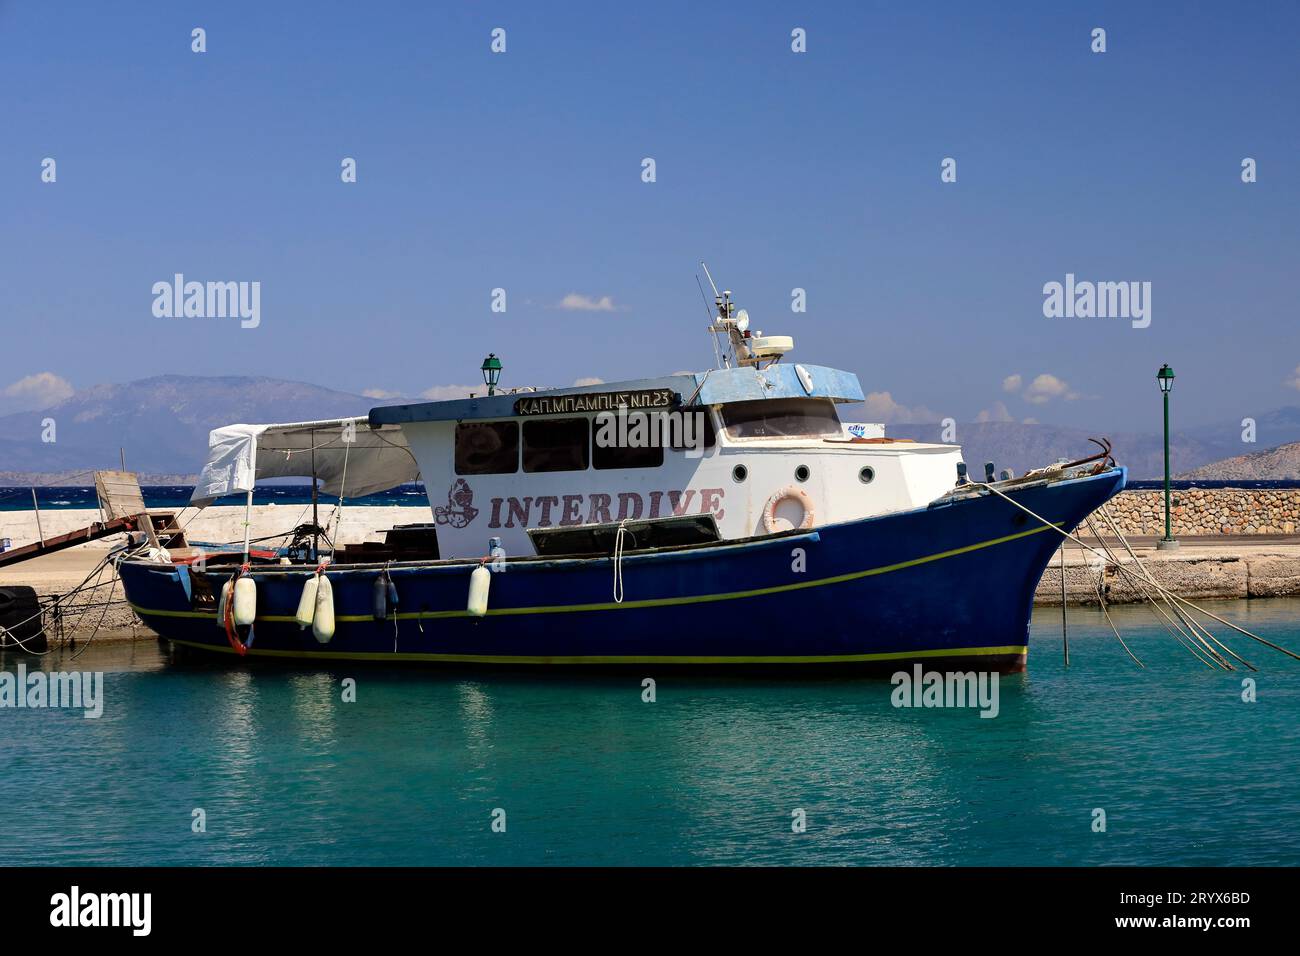 InterDive Boot, Megalochori Hafen, Agistri Insel, Saronische Inselgruppe, Griechenland. Vom Mai 2023 Stockfoto